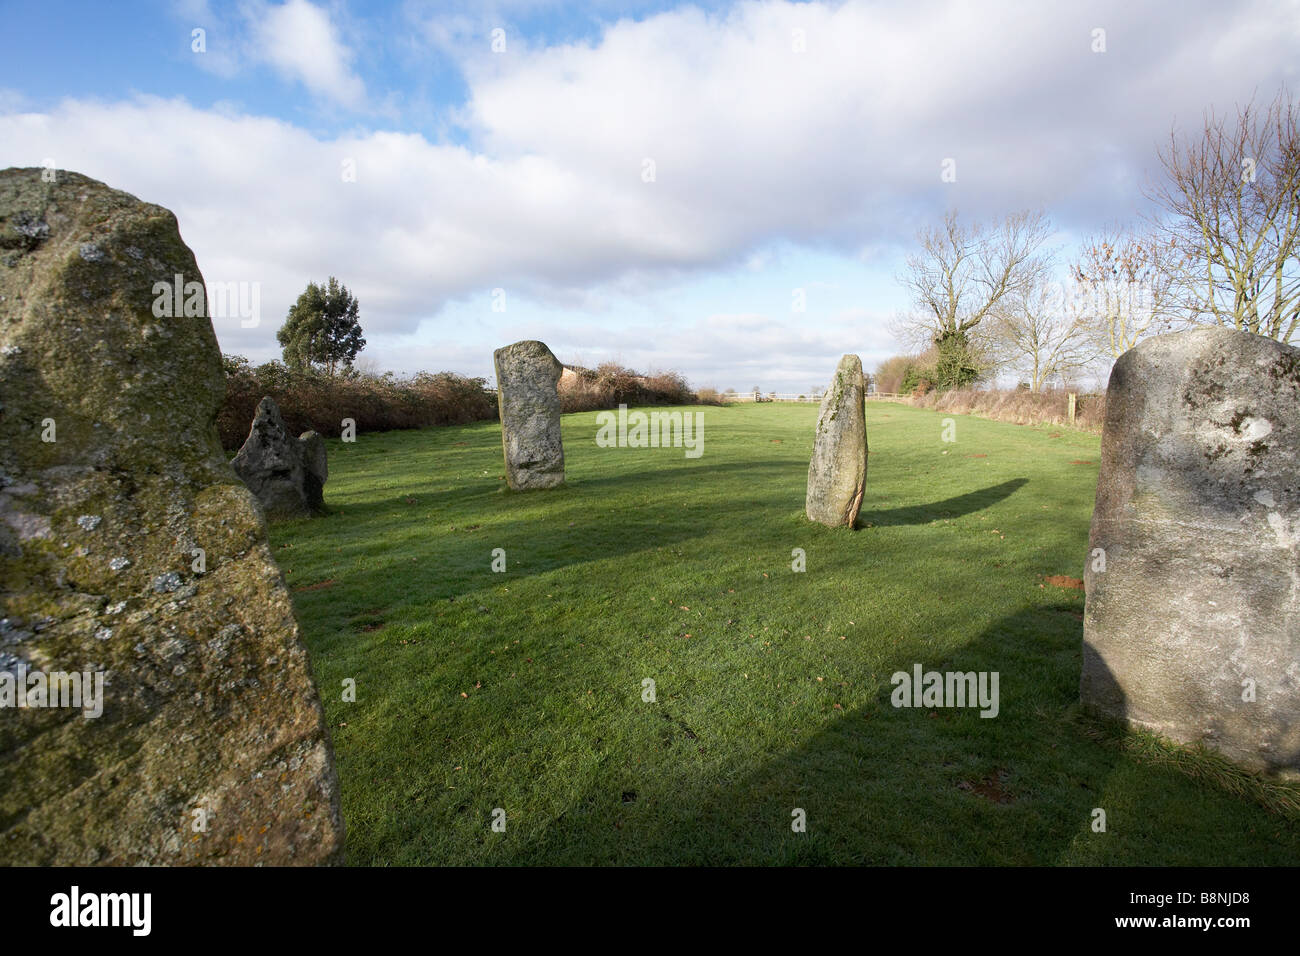 Private Menhire Stein Kreis Stonehenge in einem Garten Feld UK England Oxfordshire Stockfoto